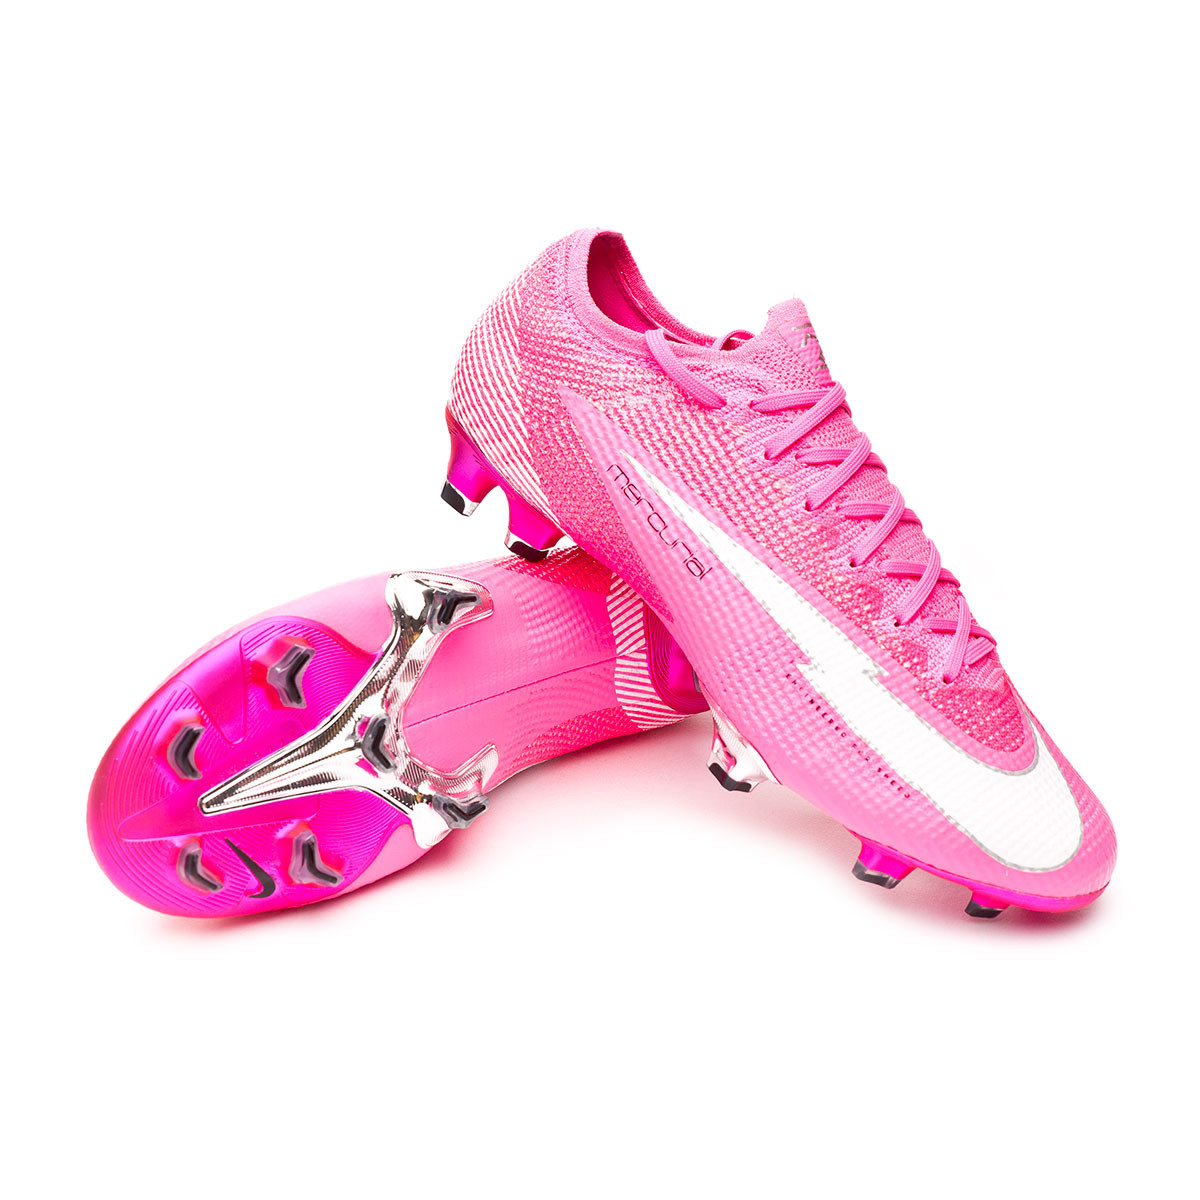 mbappe football boots